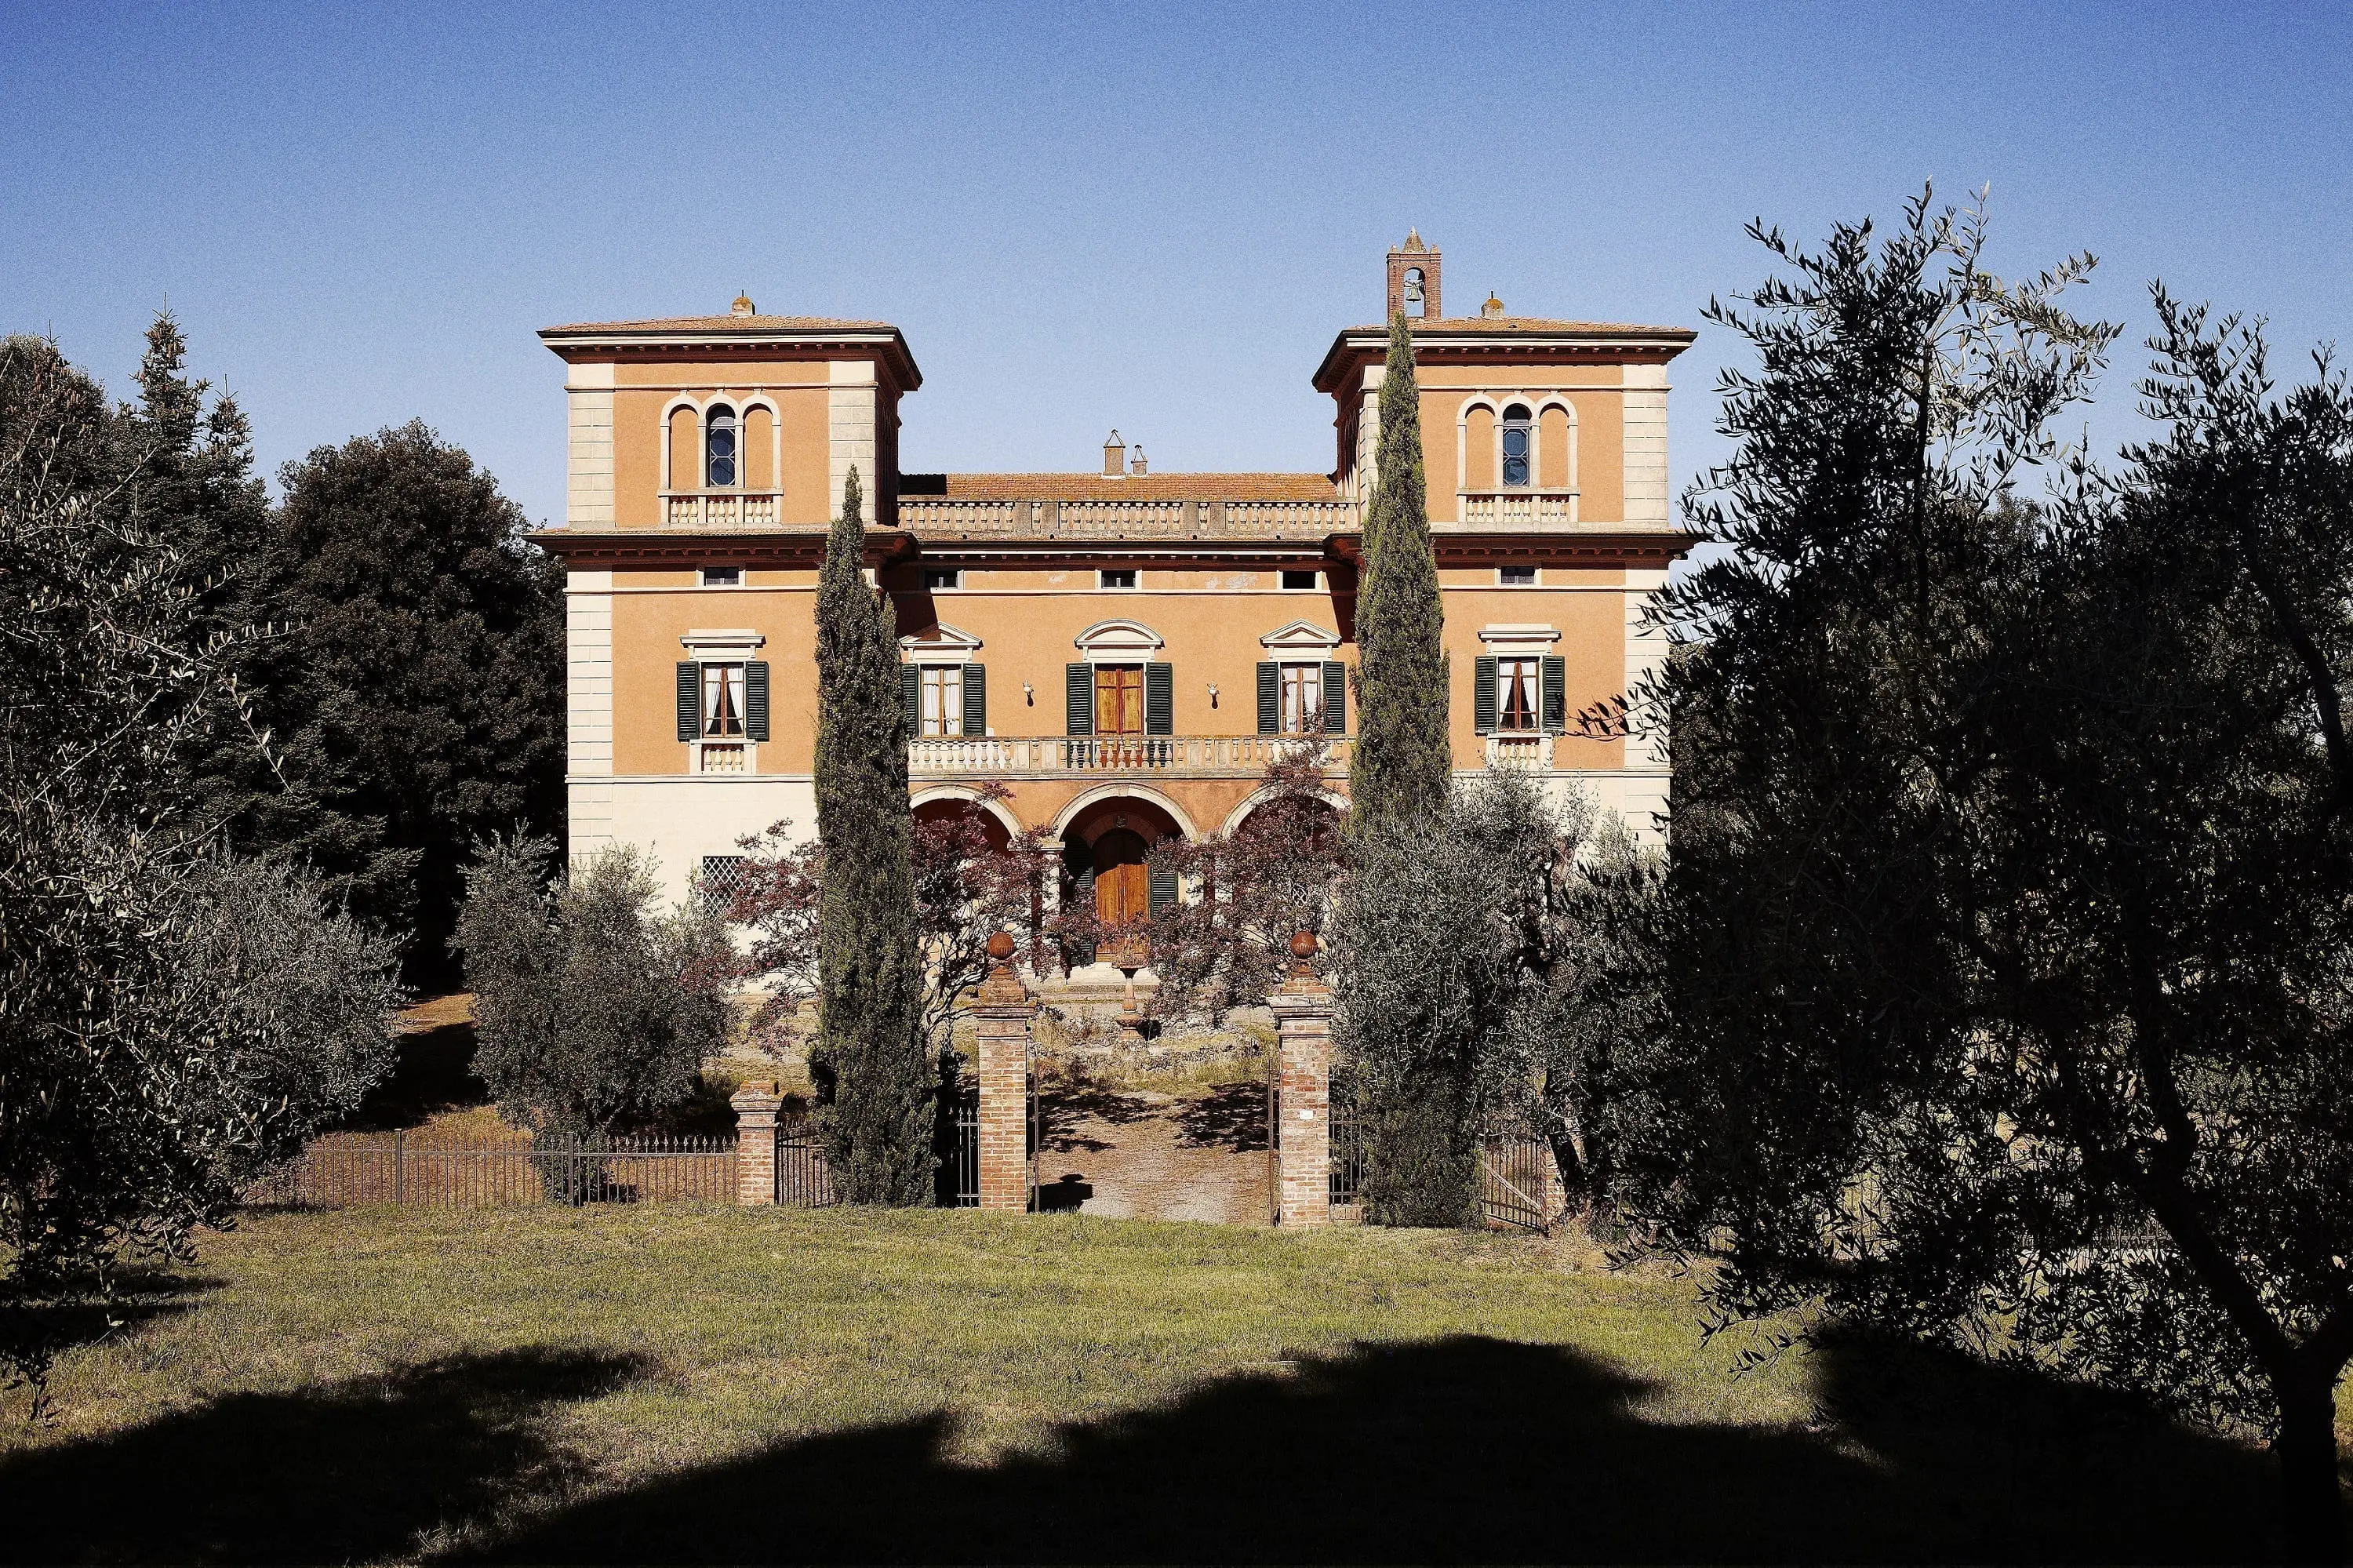 Nest Italy - Farmhouse & Artist Residency in Tuscany